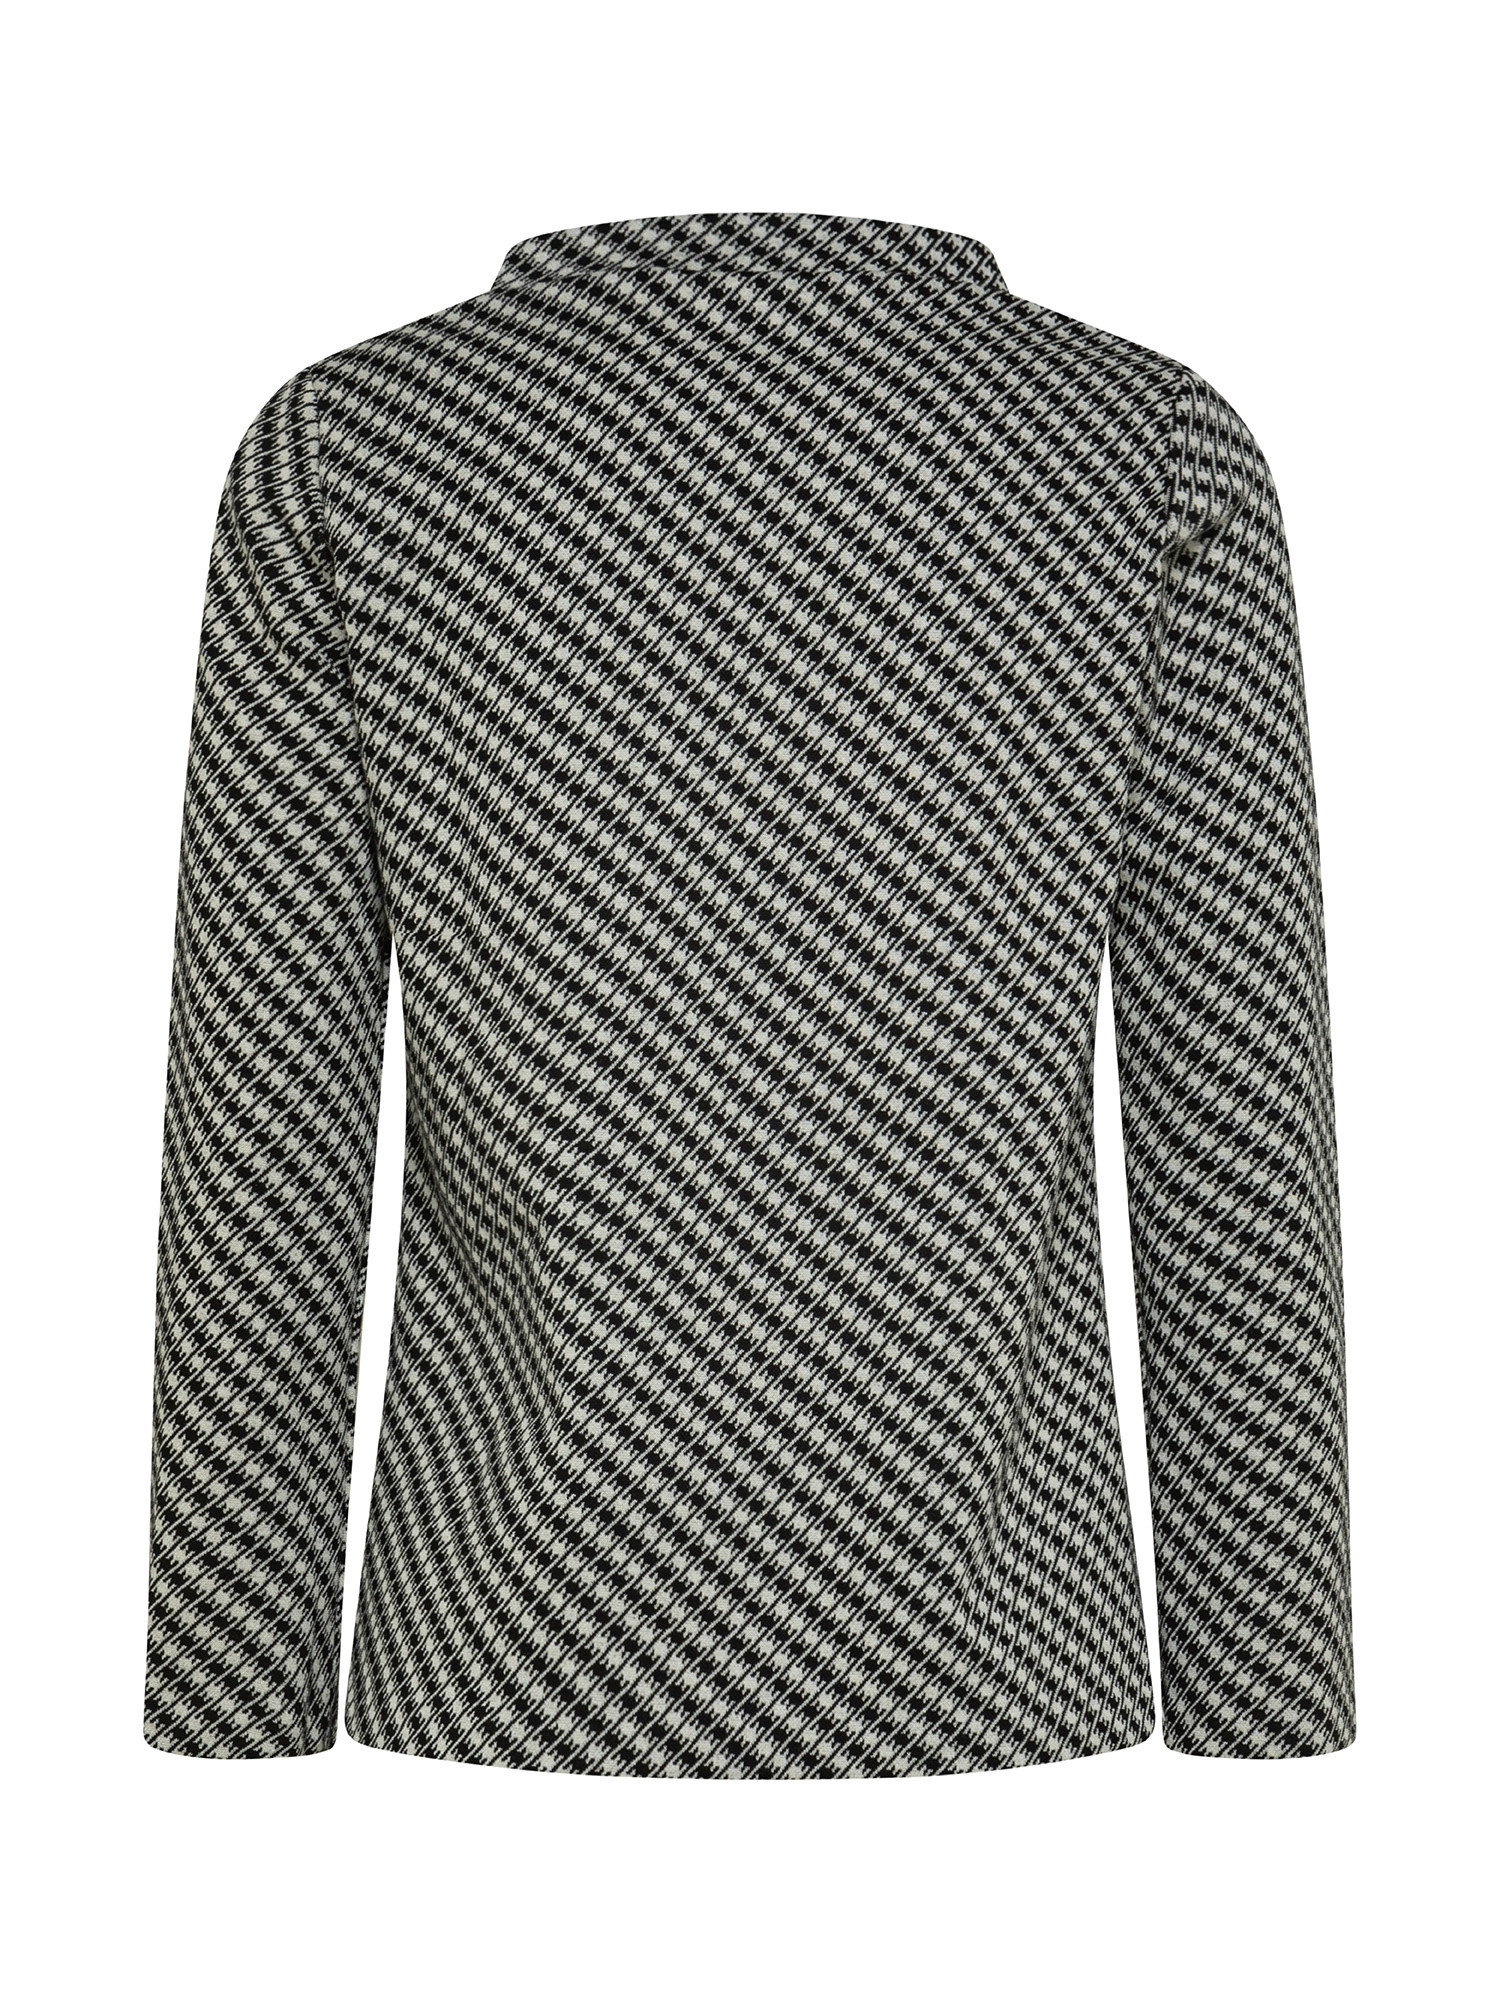 Koan - Jacquard turtleneck sweater, White, large image number 1